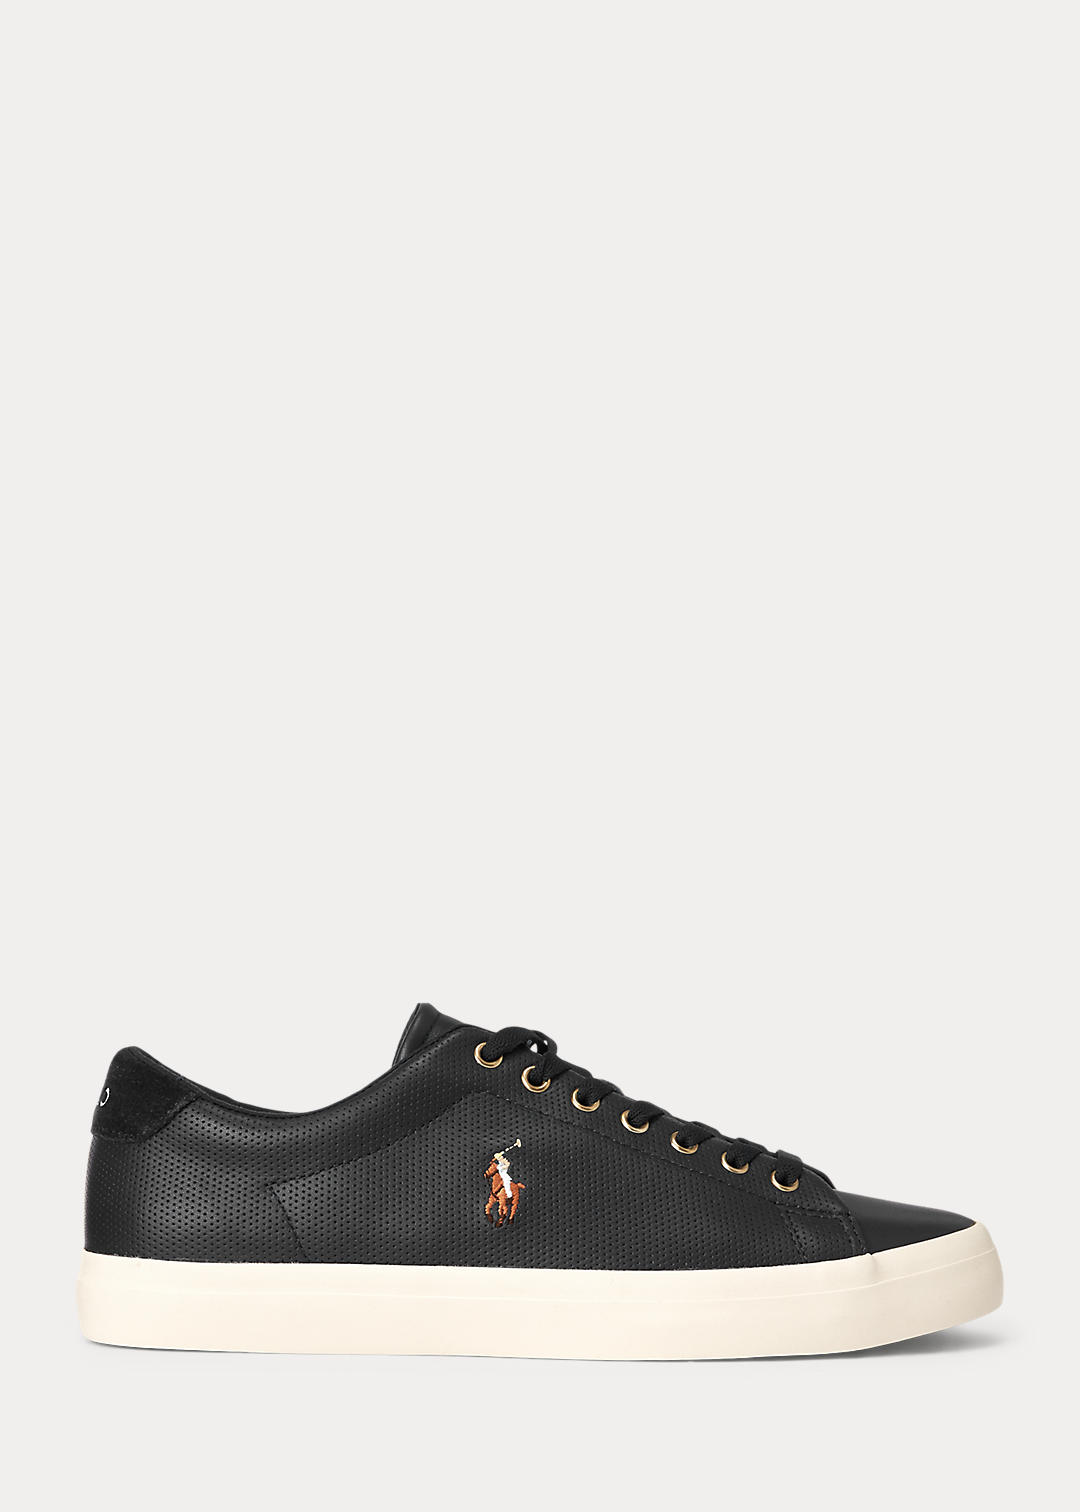 Ellende roem Pellen Men's Longwood Leather Sneaker | Ralph Lauren